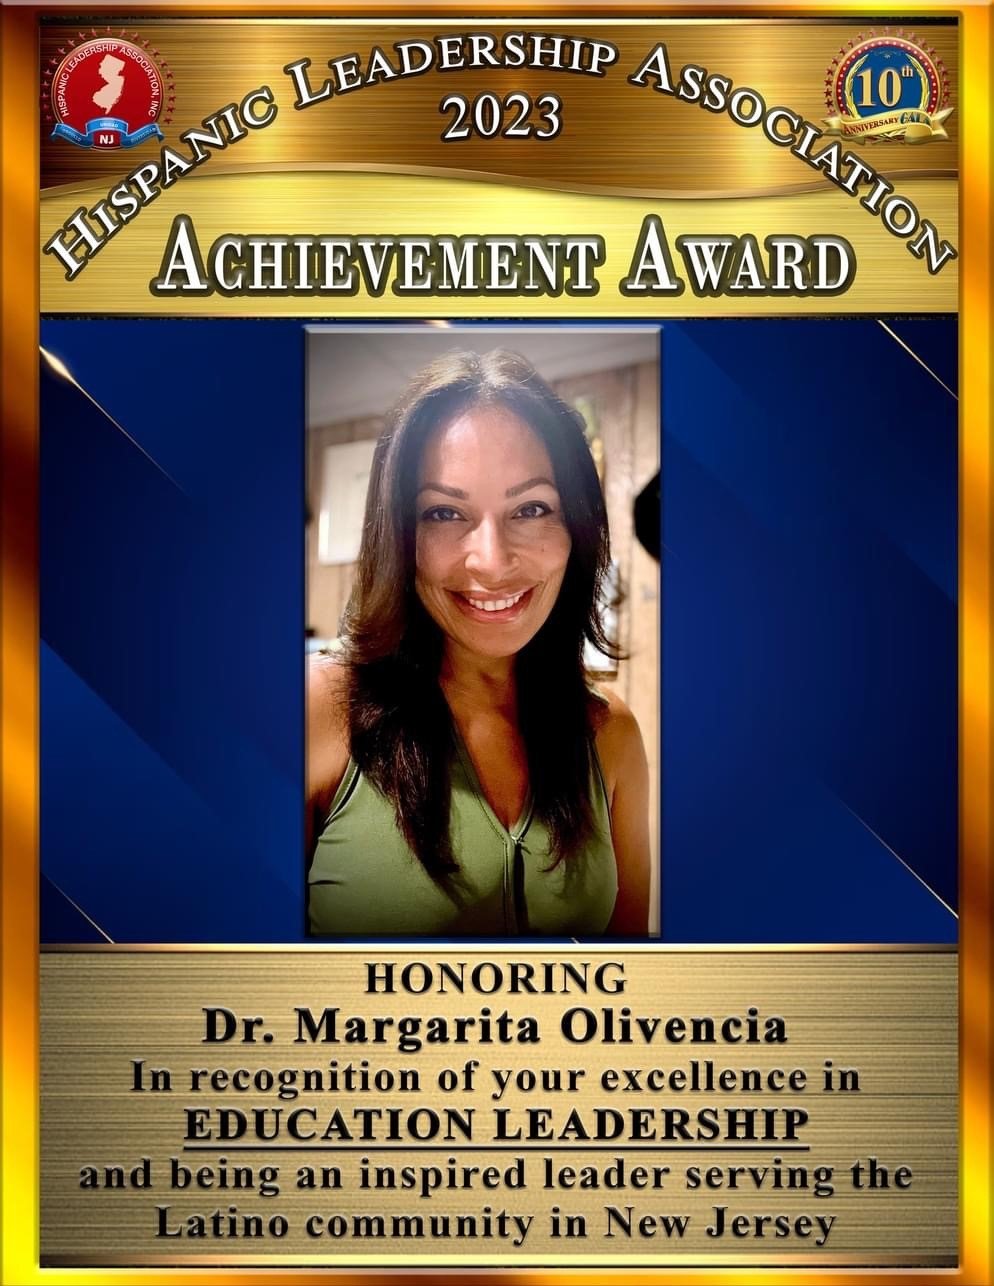 Dr. Margarita Olivencia